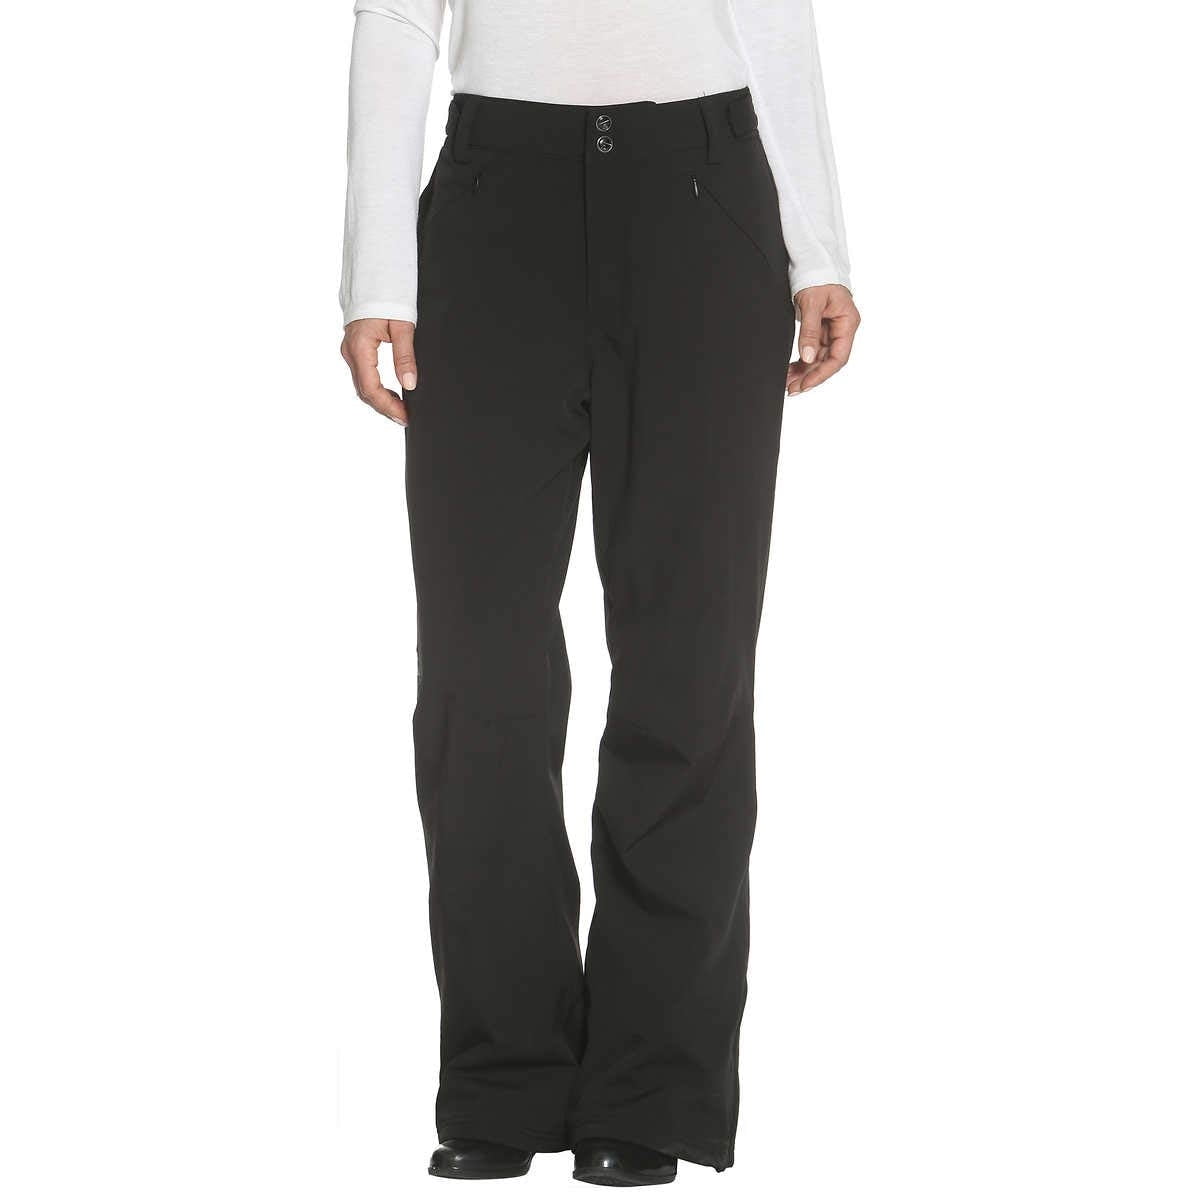 Gerry Women's Stretch Fleece Lined Snow Pants Gray/ Black 